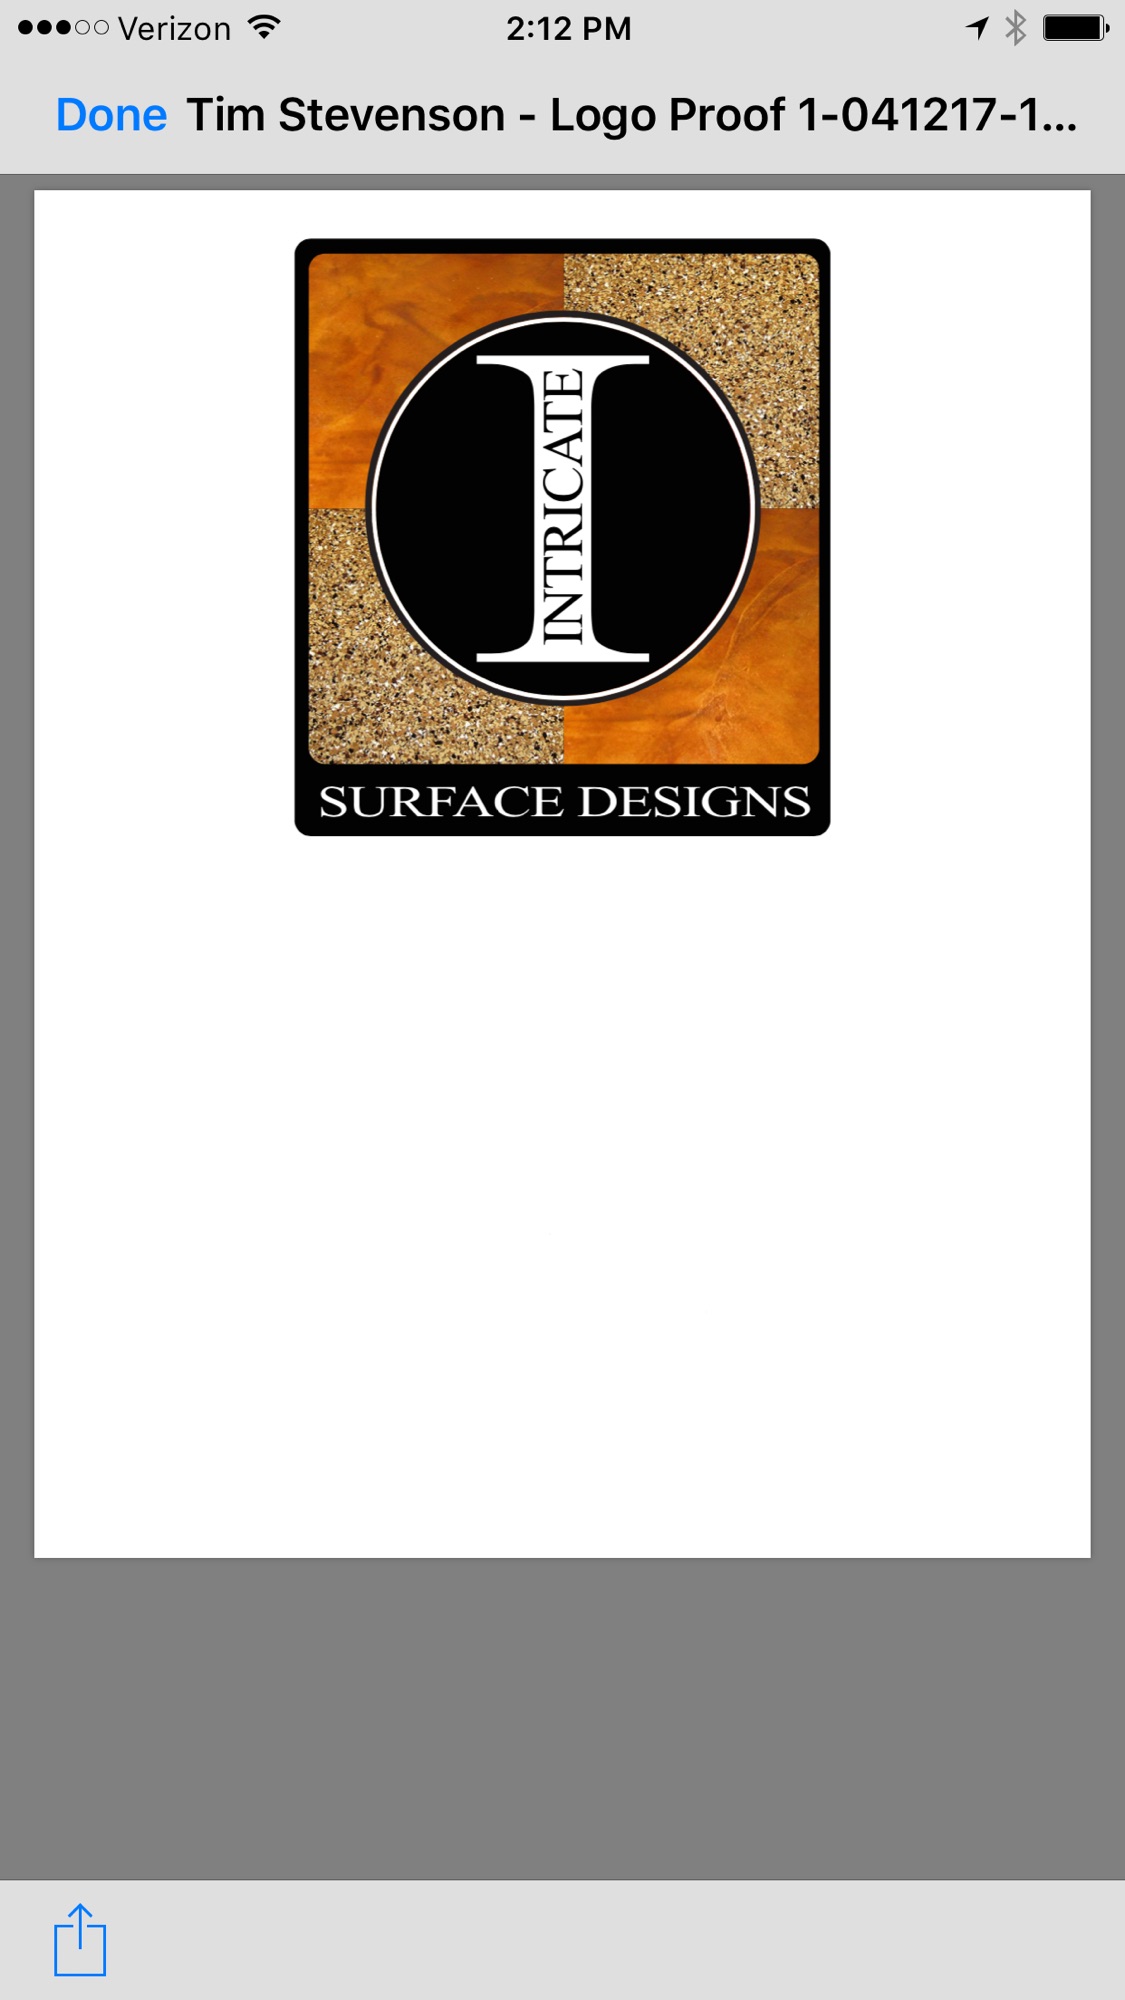 Intricate Surface Designs, LLC Logo